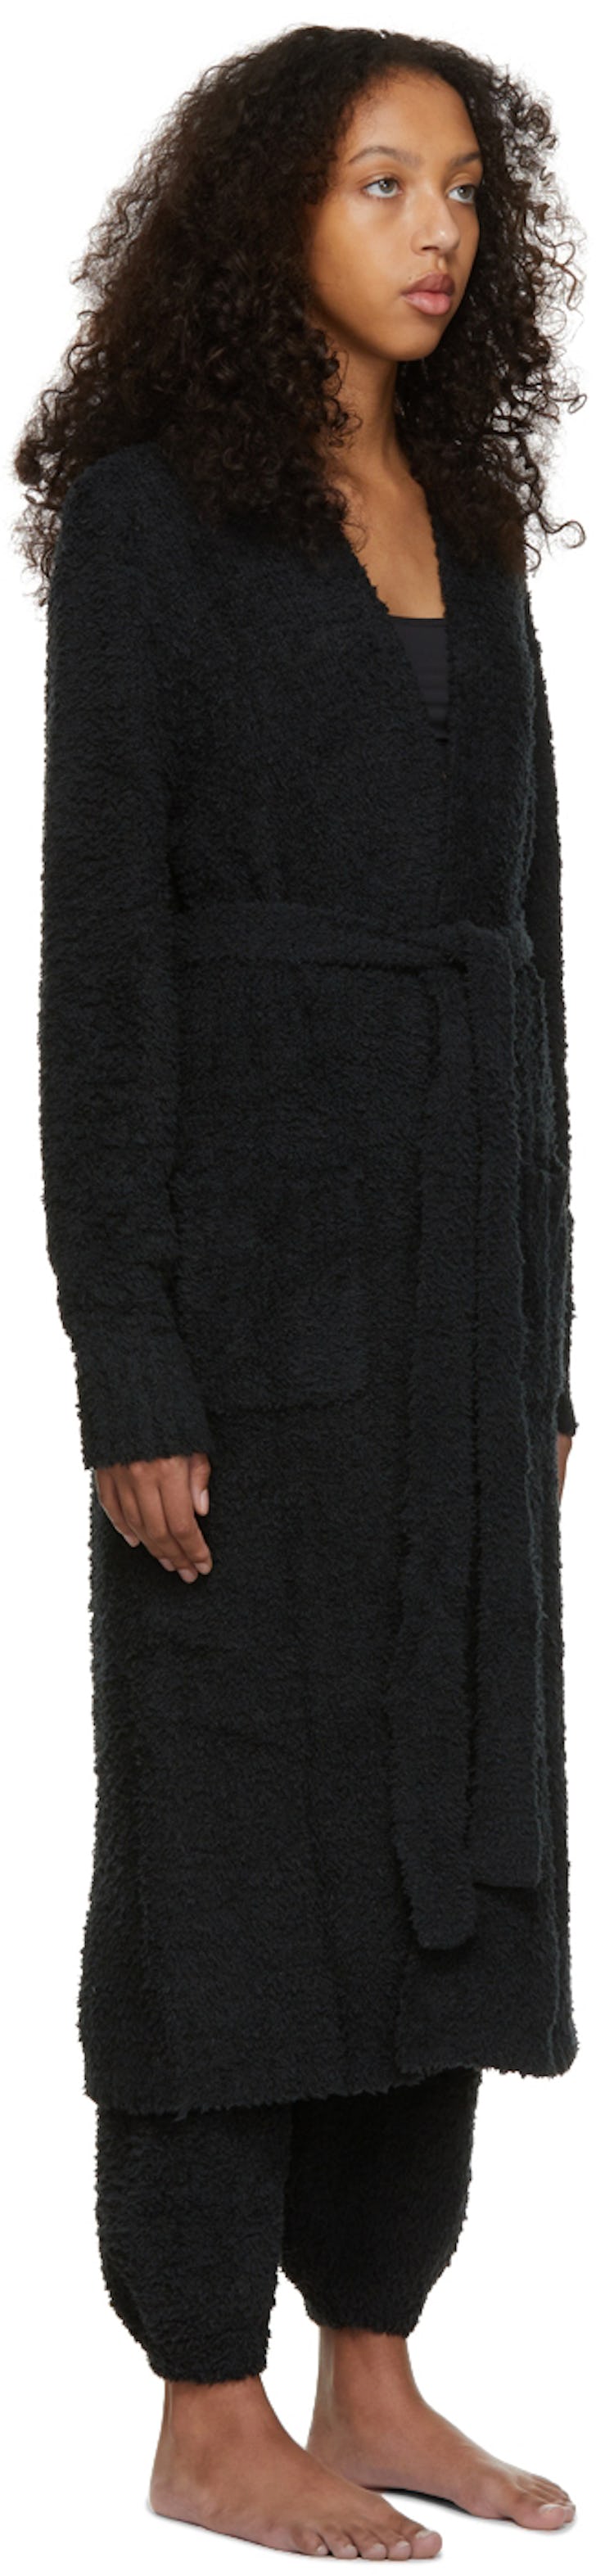 Black Cozy Knit Robe: additional image